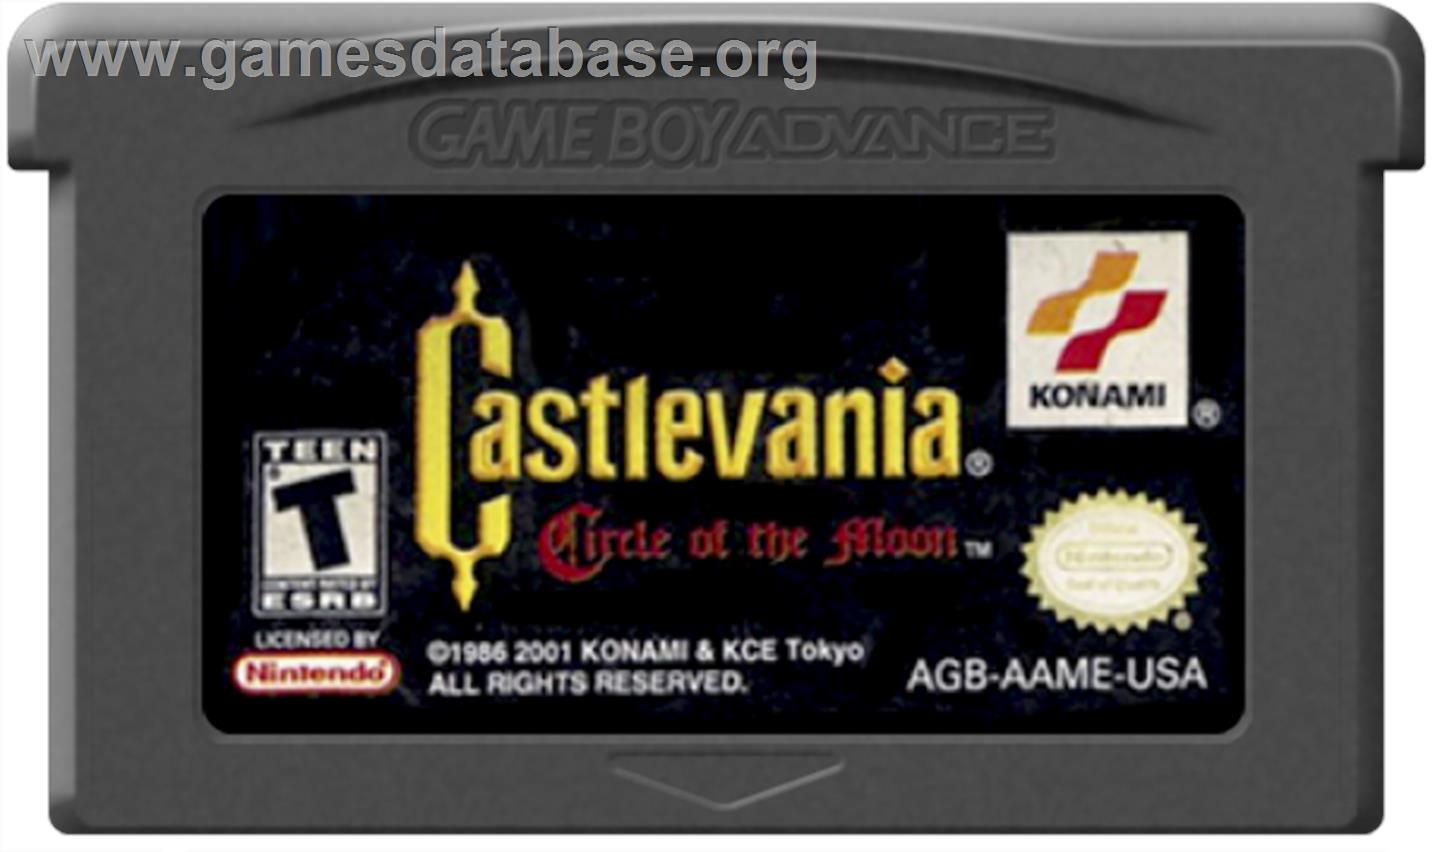 Castlevania - Nintendo Game Boy Advance - Artwork - Cartridge